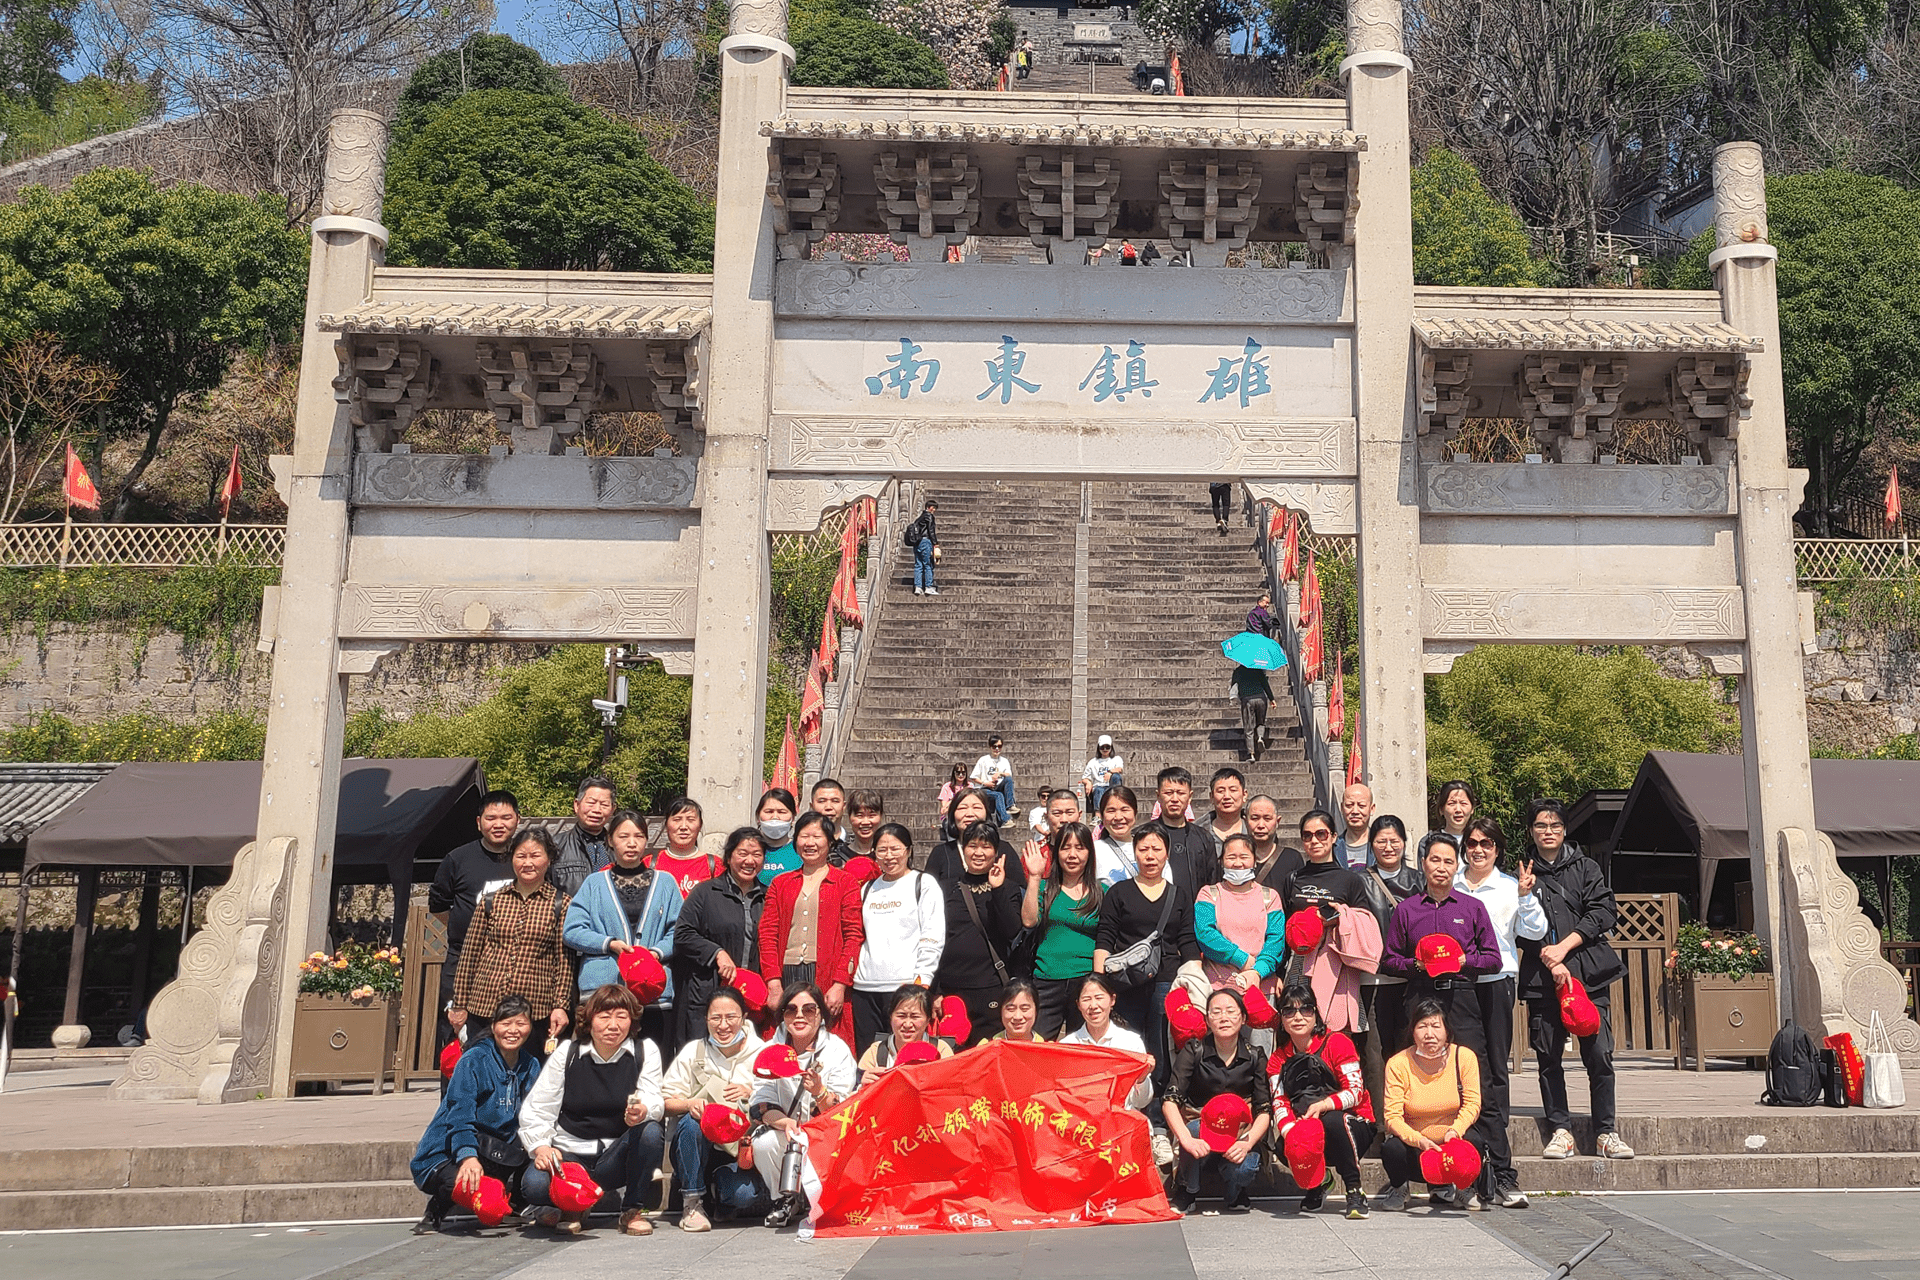 On March 8, 2023, International Women’s Day, YiLi tie organized a one-day trip to Taizhou Linhai for employees